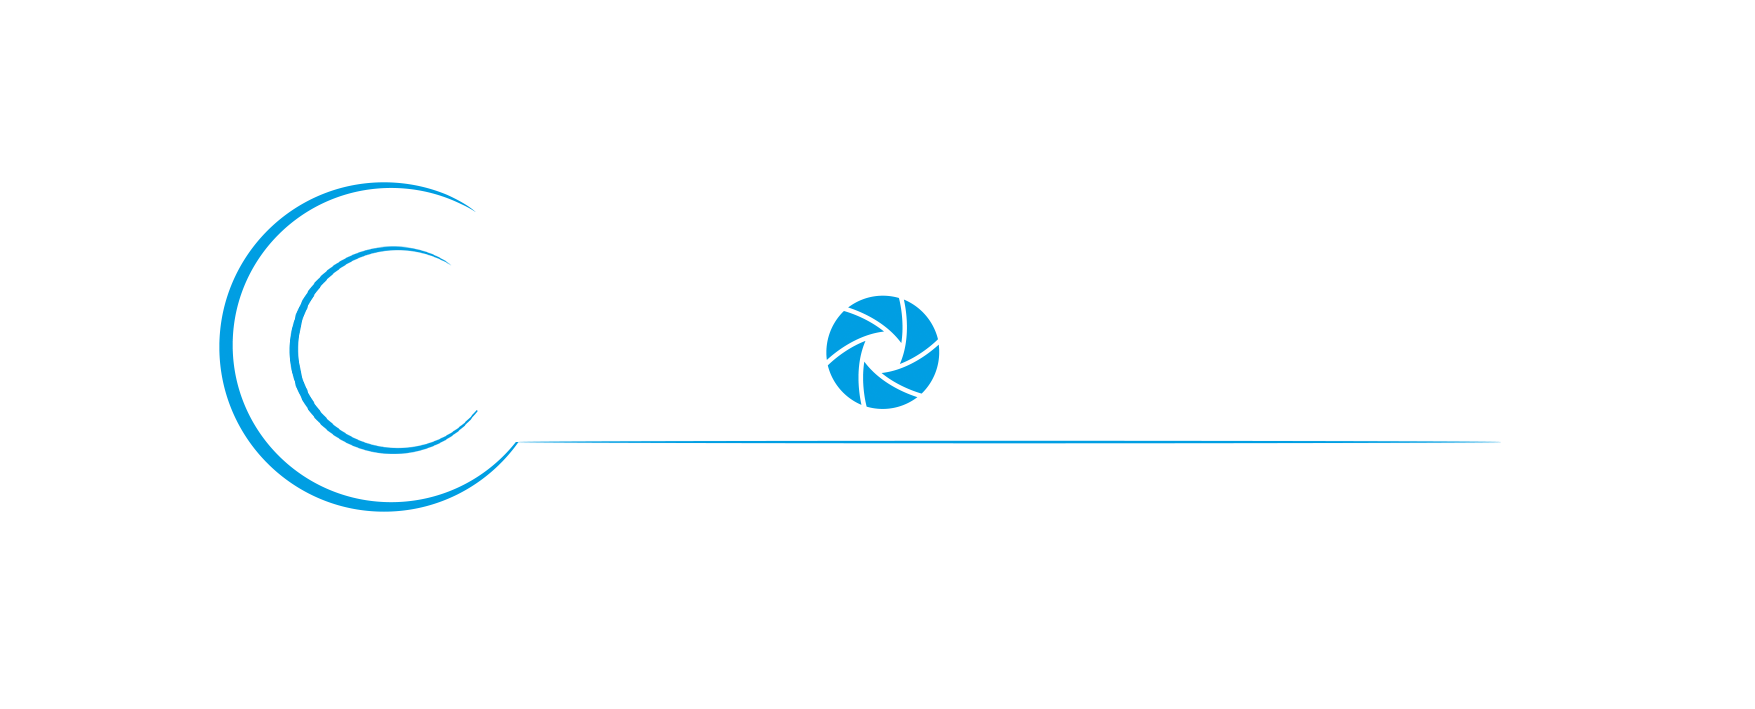 360° Panoramic VT Logo